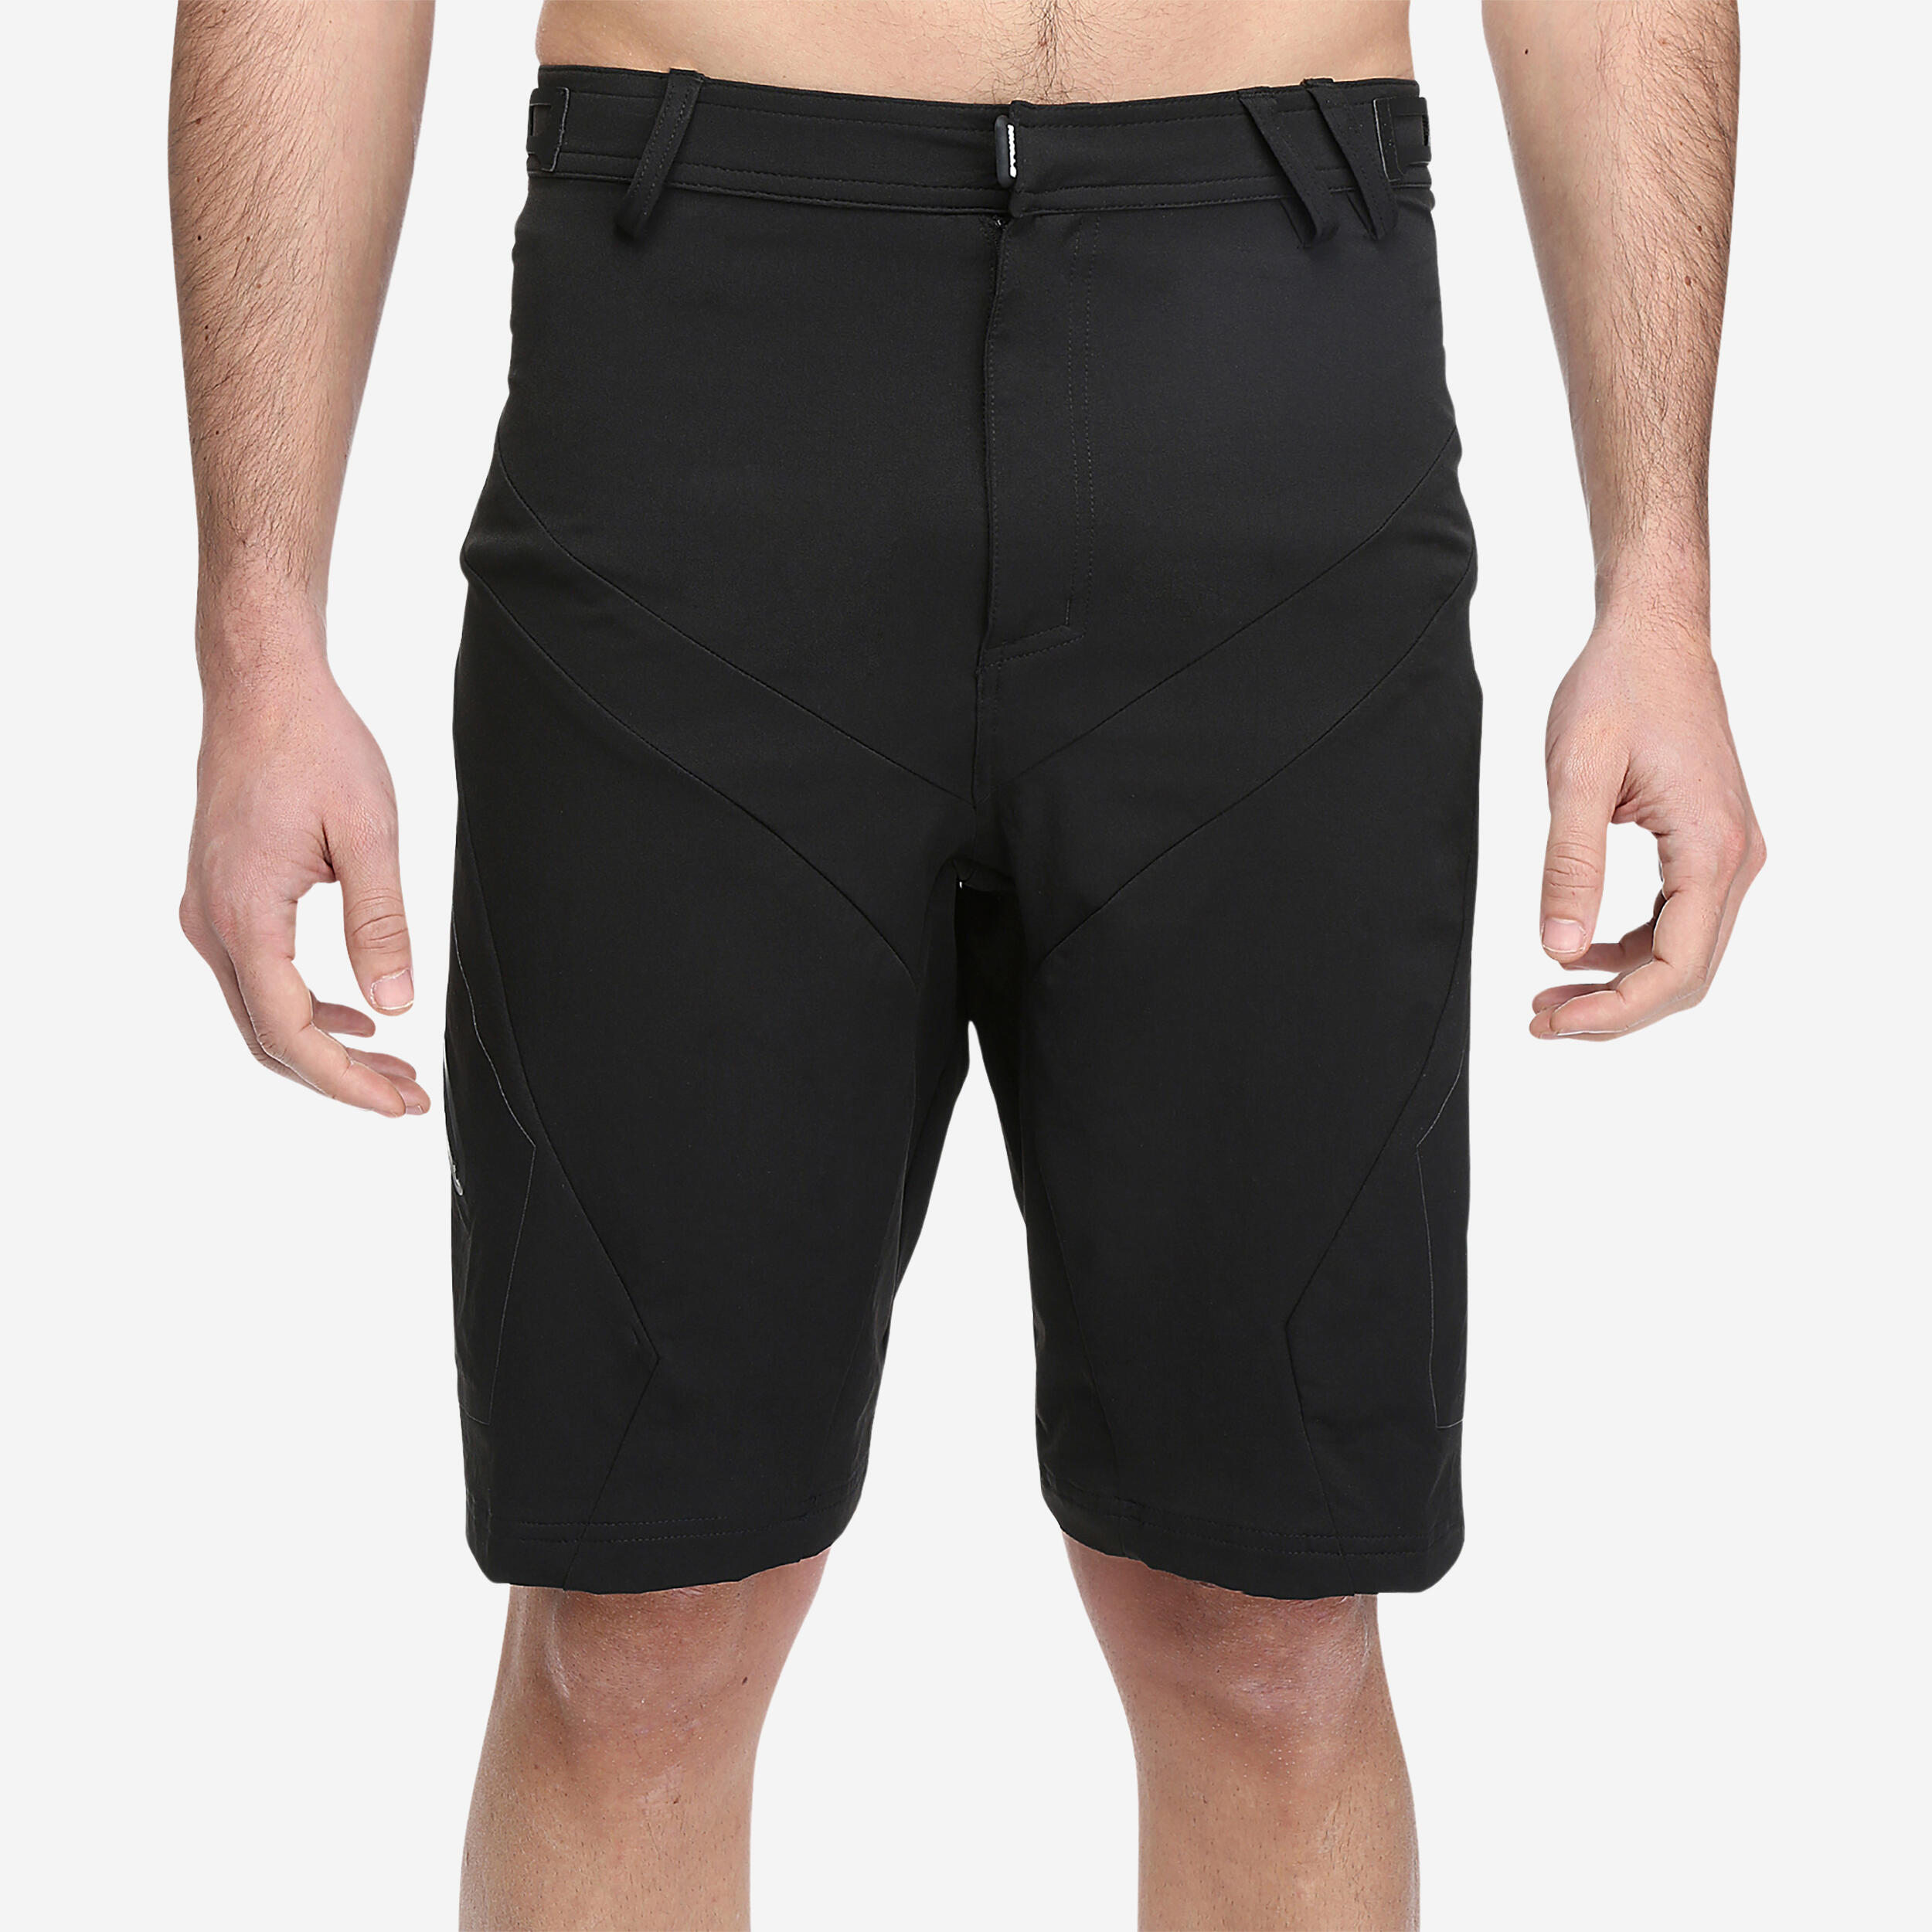 Men's Mountain Biking Shorts - Expl 700 Black - ROCKRIDER